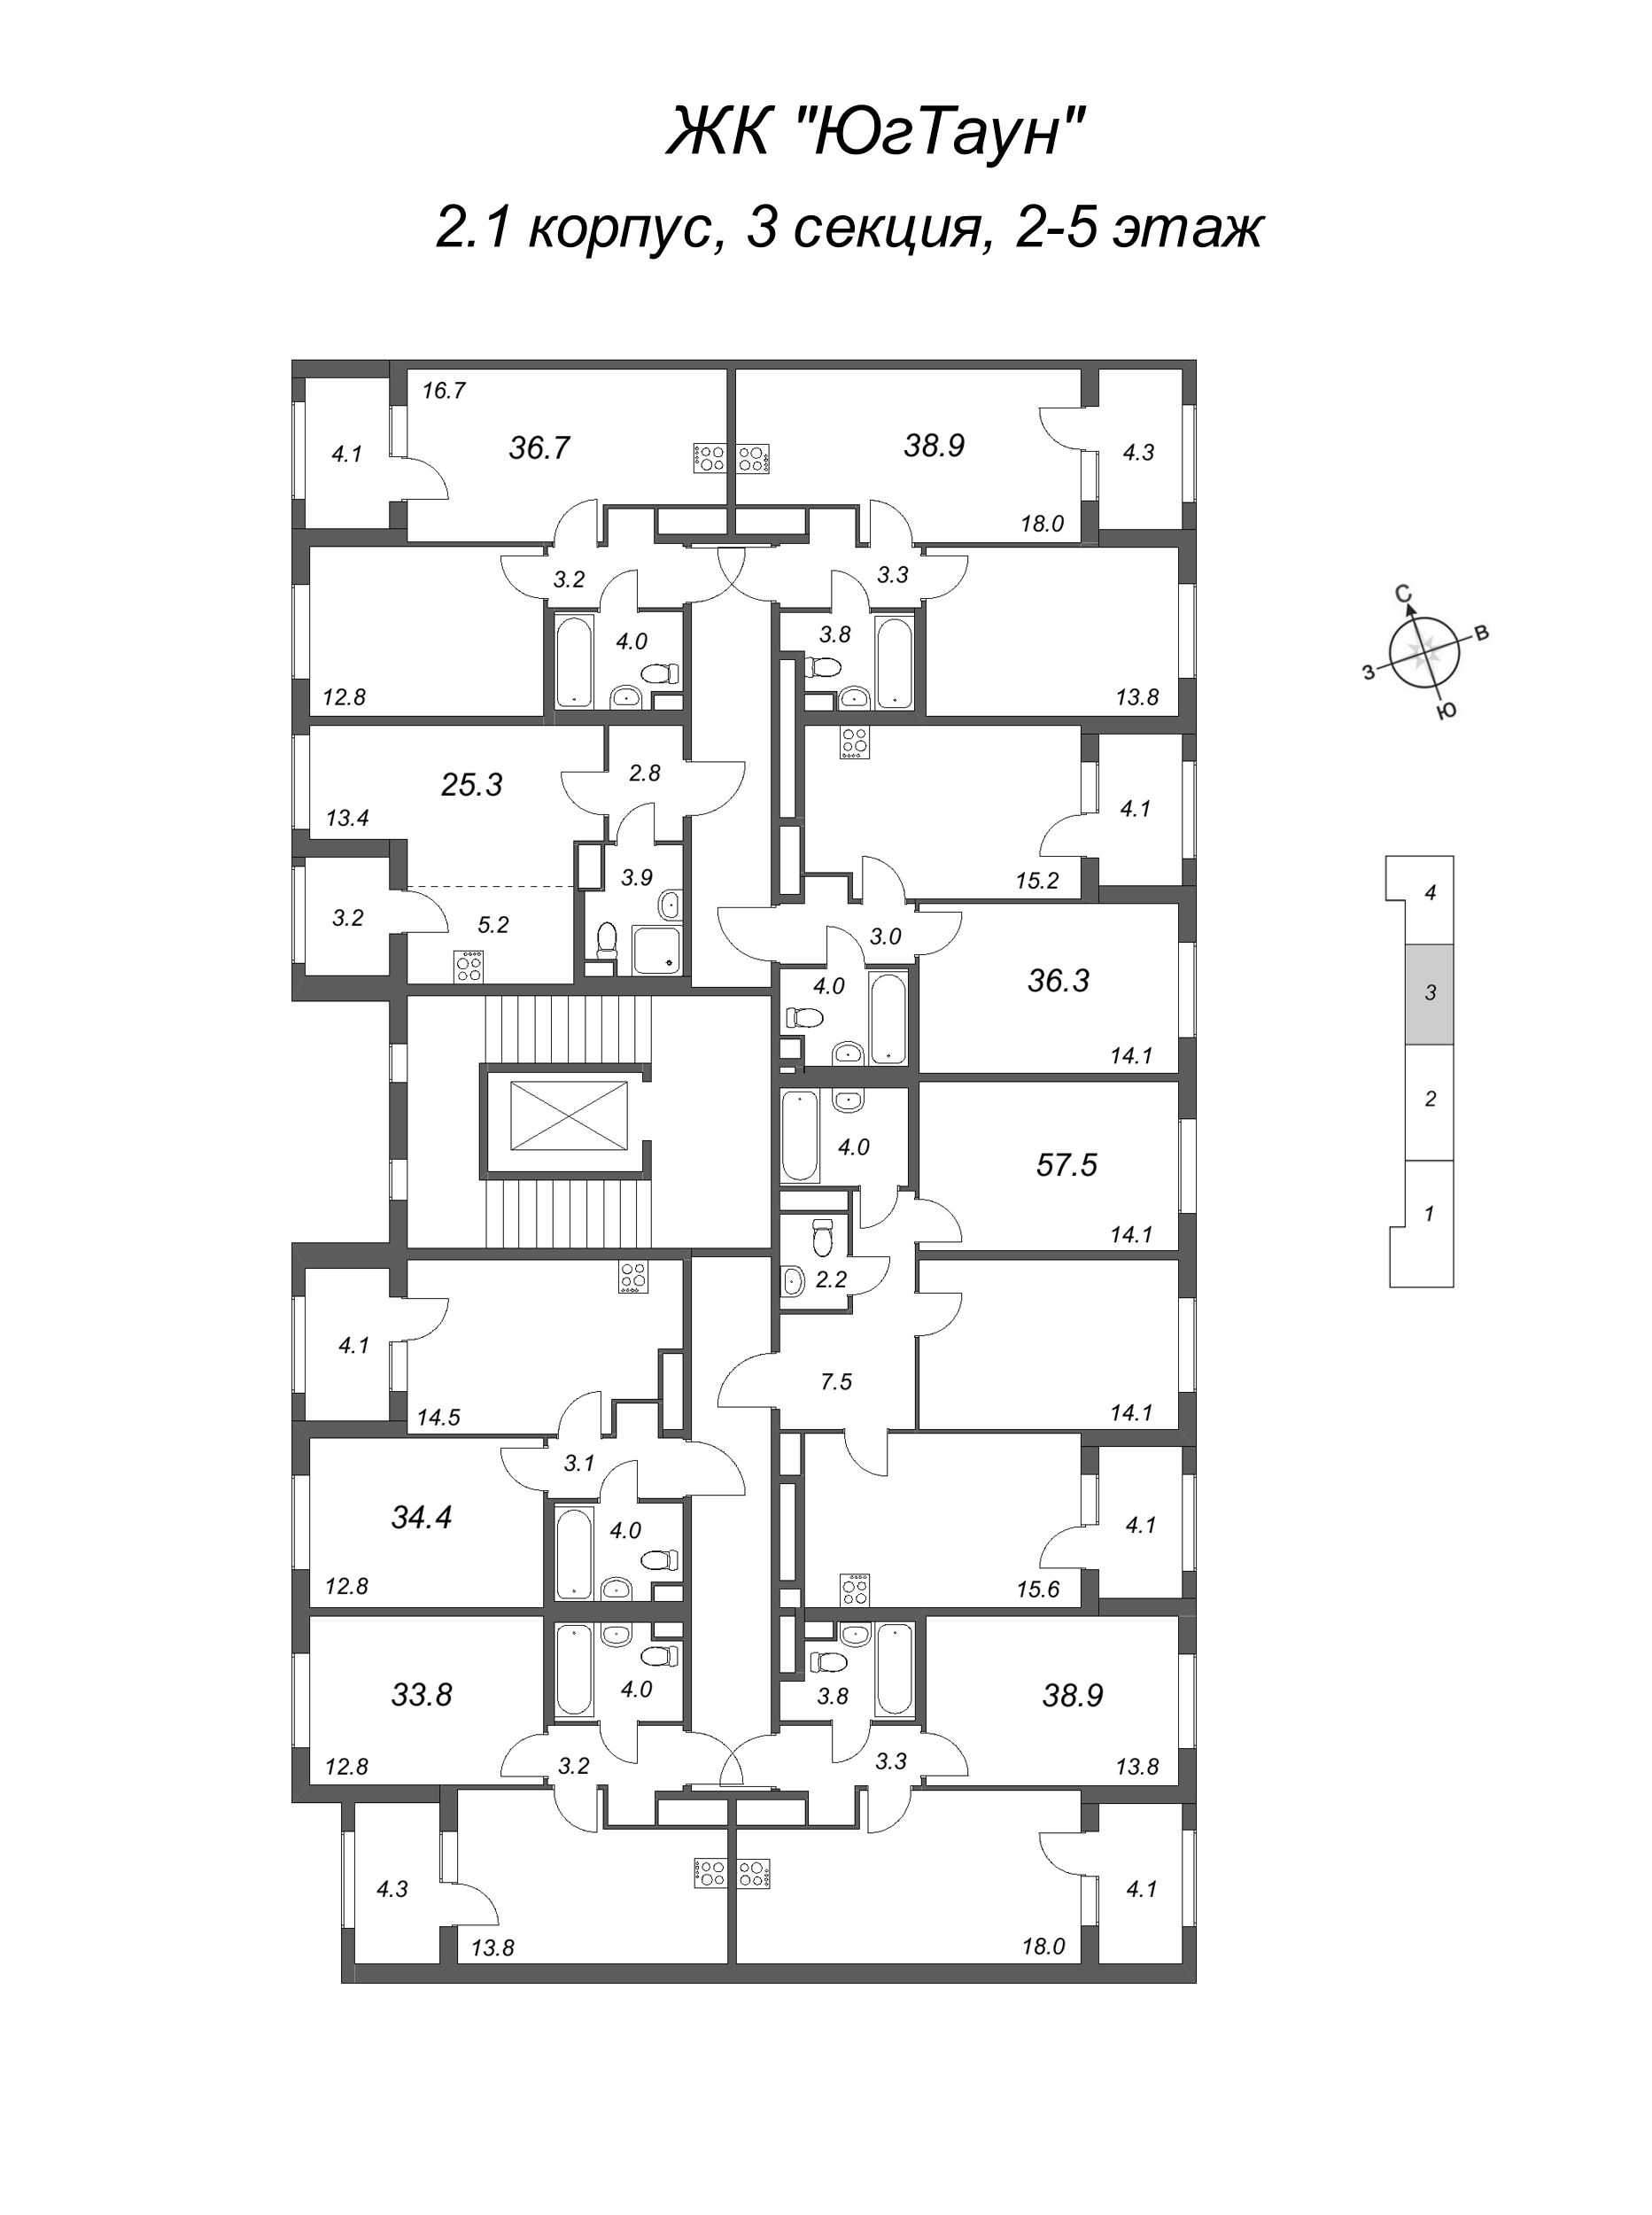 3-комнатная (Евро) квартира, 57.5 м² - планировка этажа